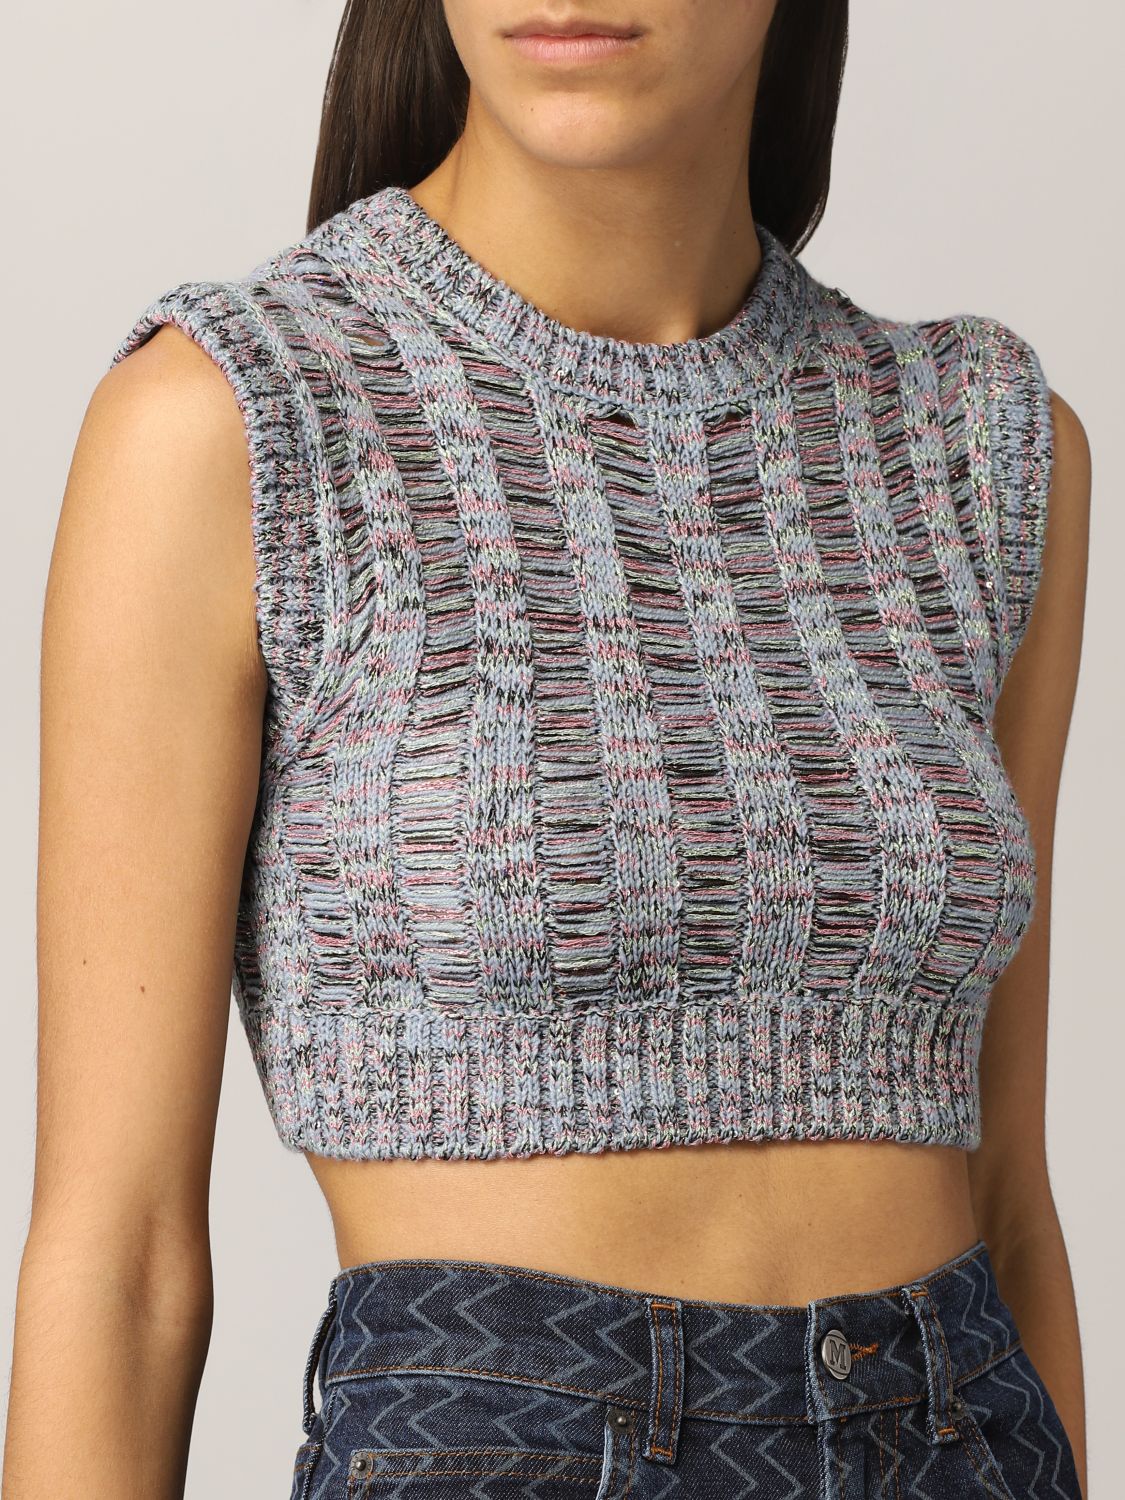 M Missoni cropped top in lurex wool blend knit